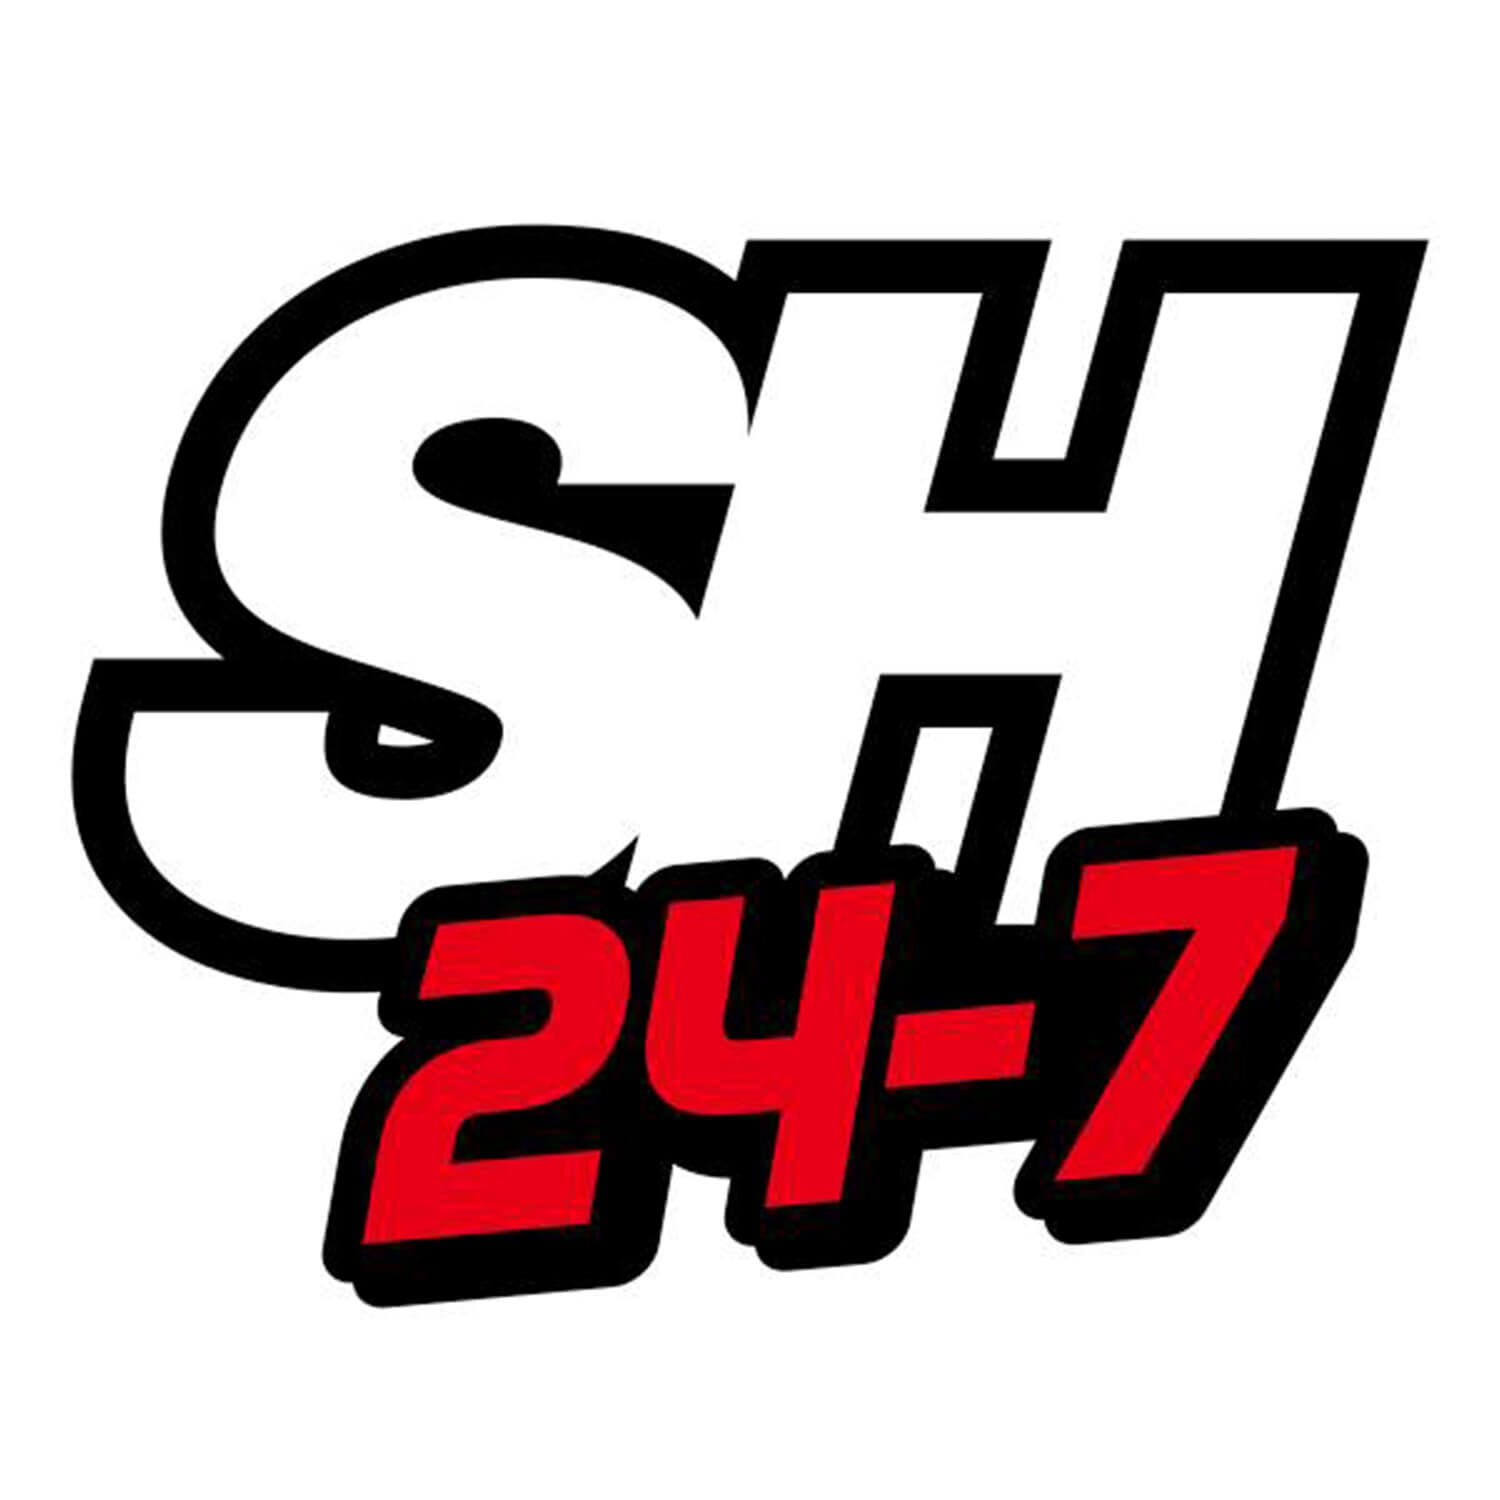 Sledhead 24-7 logo